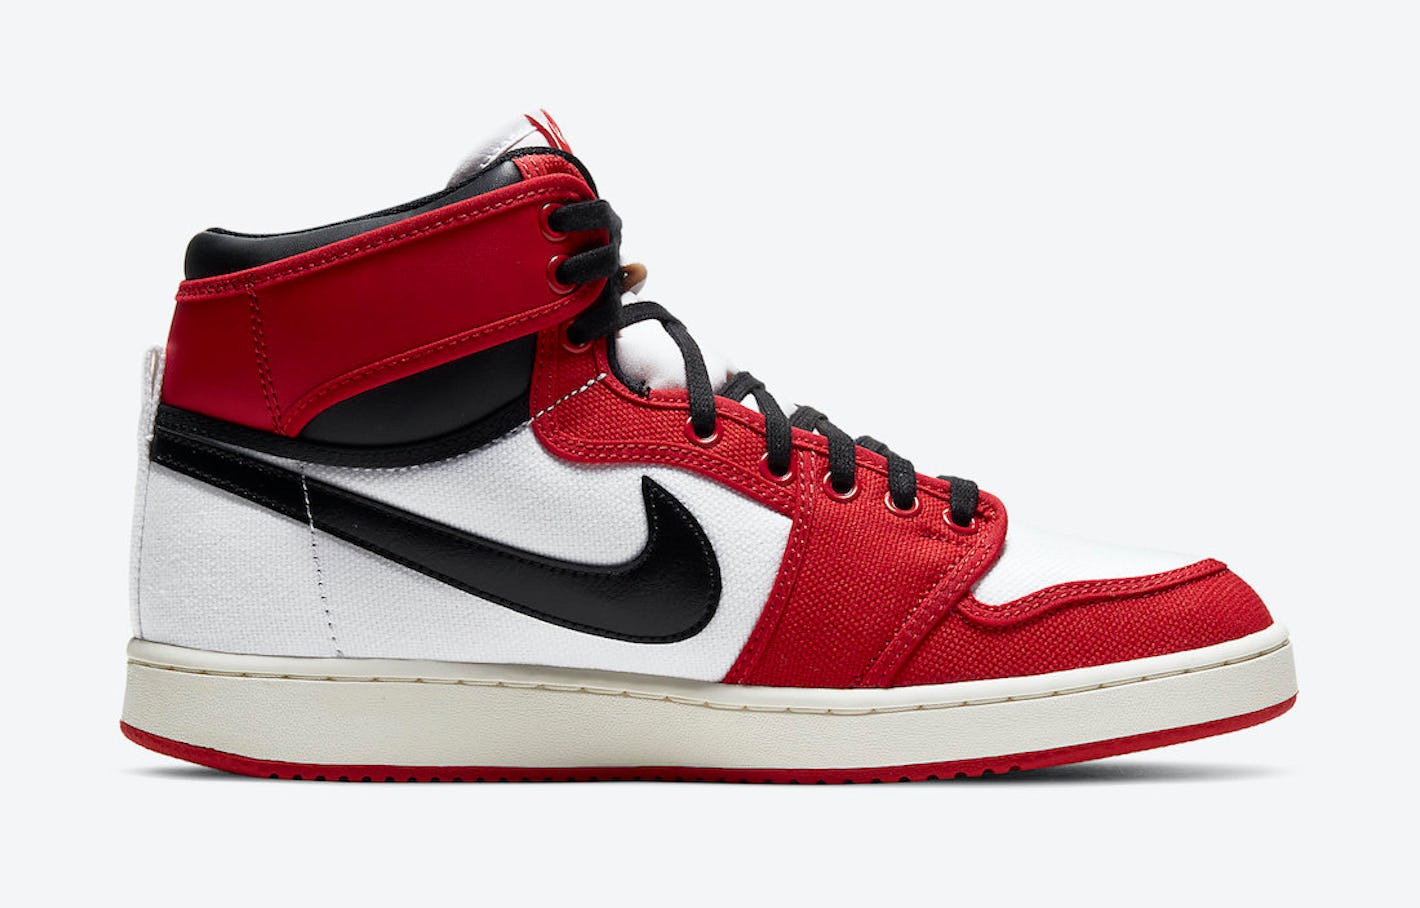 Nike’s highly anticipated Jordan 1 KO ‘Chicago’ sneaker drops in May